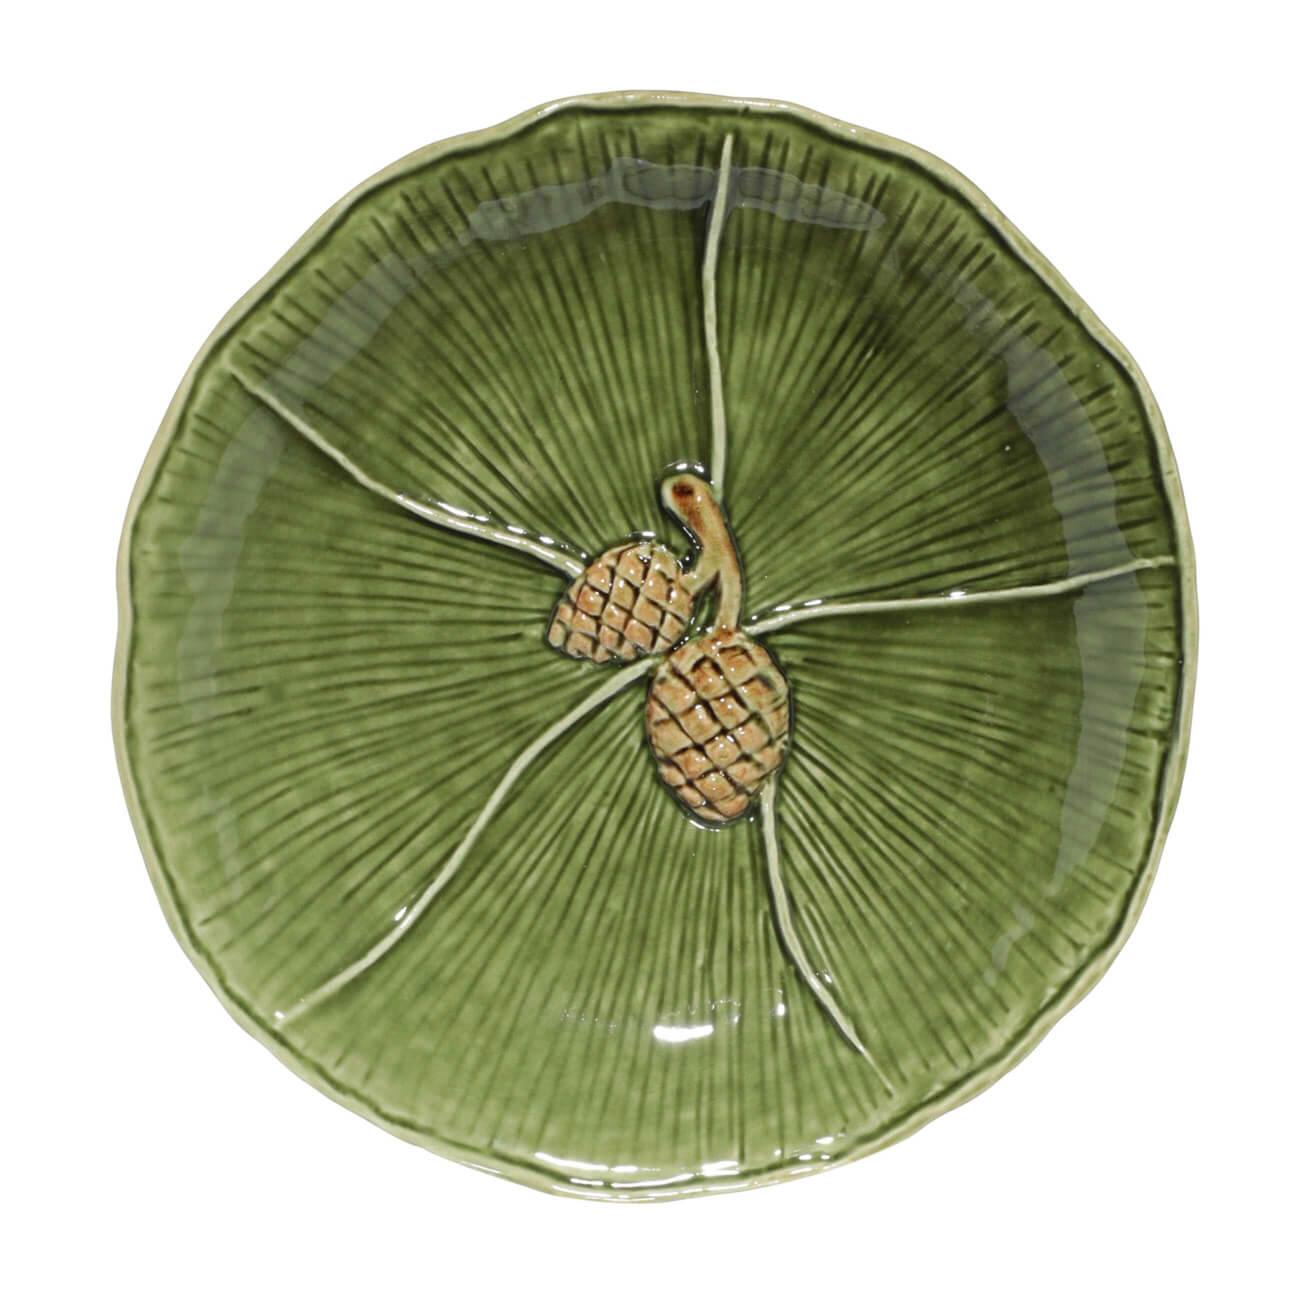 Блюдо, 19 см, керамика, зеленое, Шишки на листе, Fir cone блюдо для запекания berghoff 18х12 5 см керамика 4490281